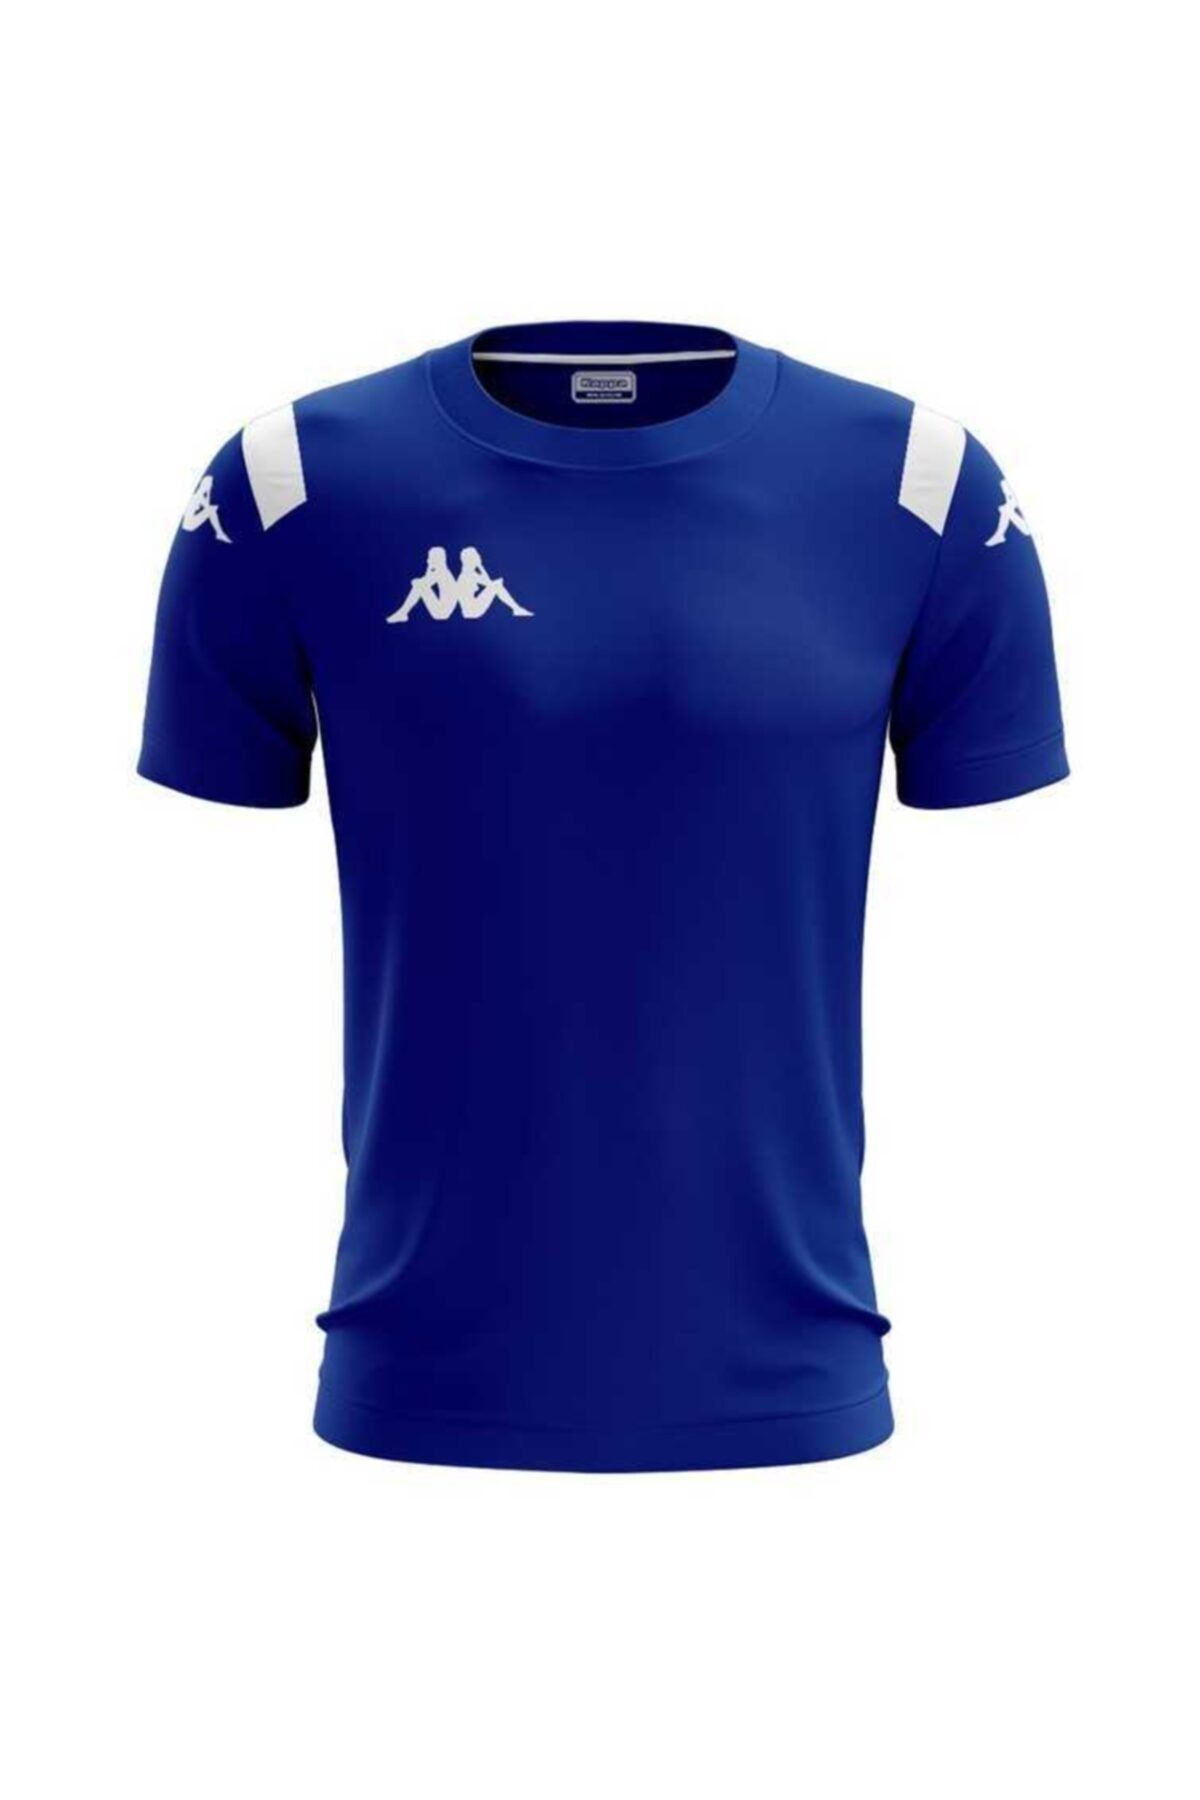 Kappa Erkek Mavi Player Abou3 T-shirt